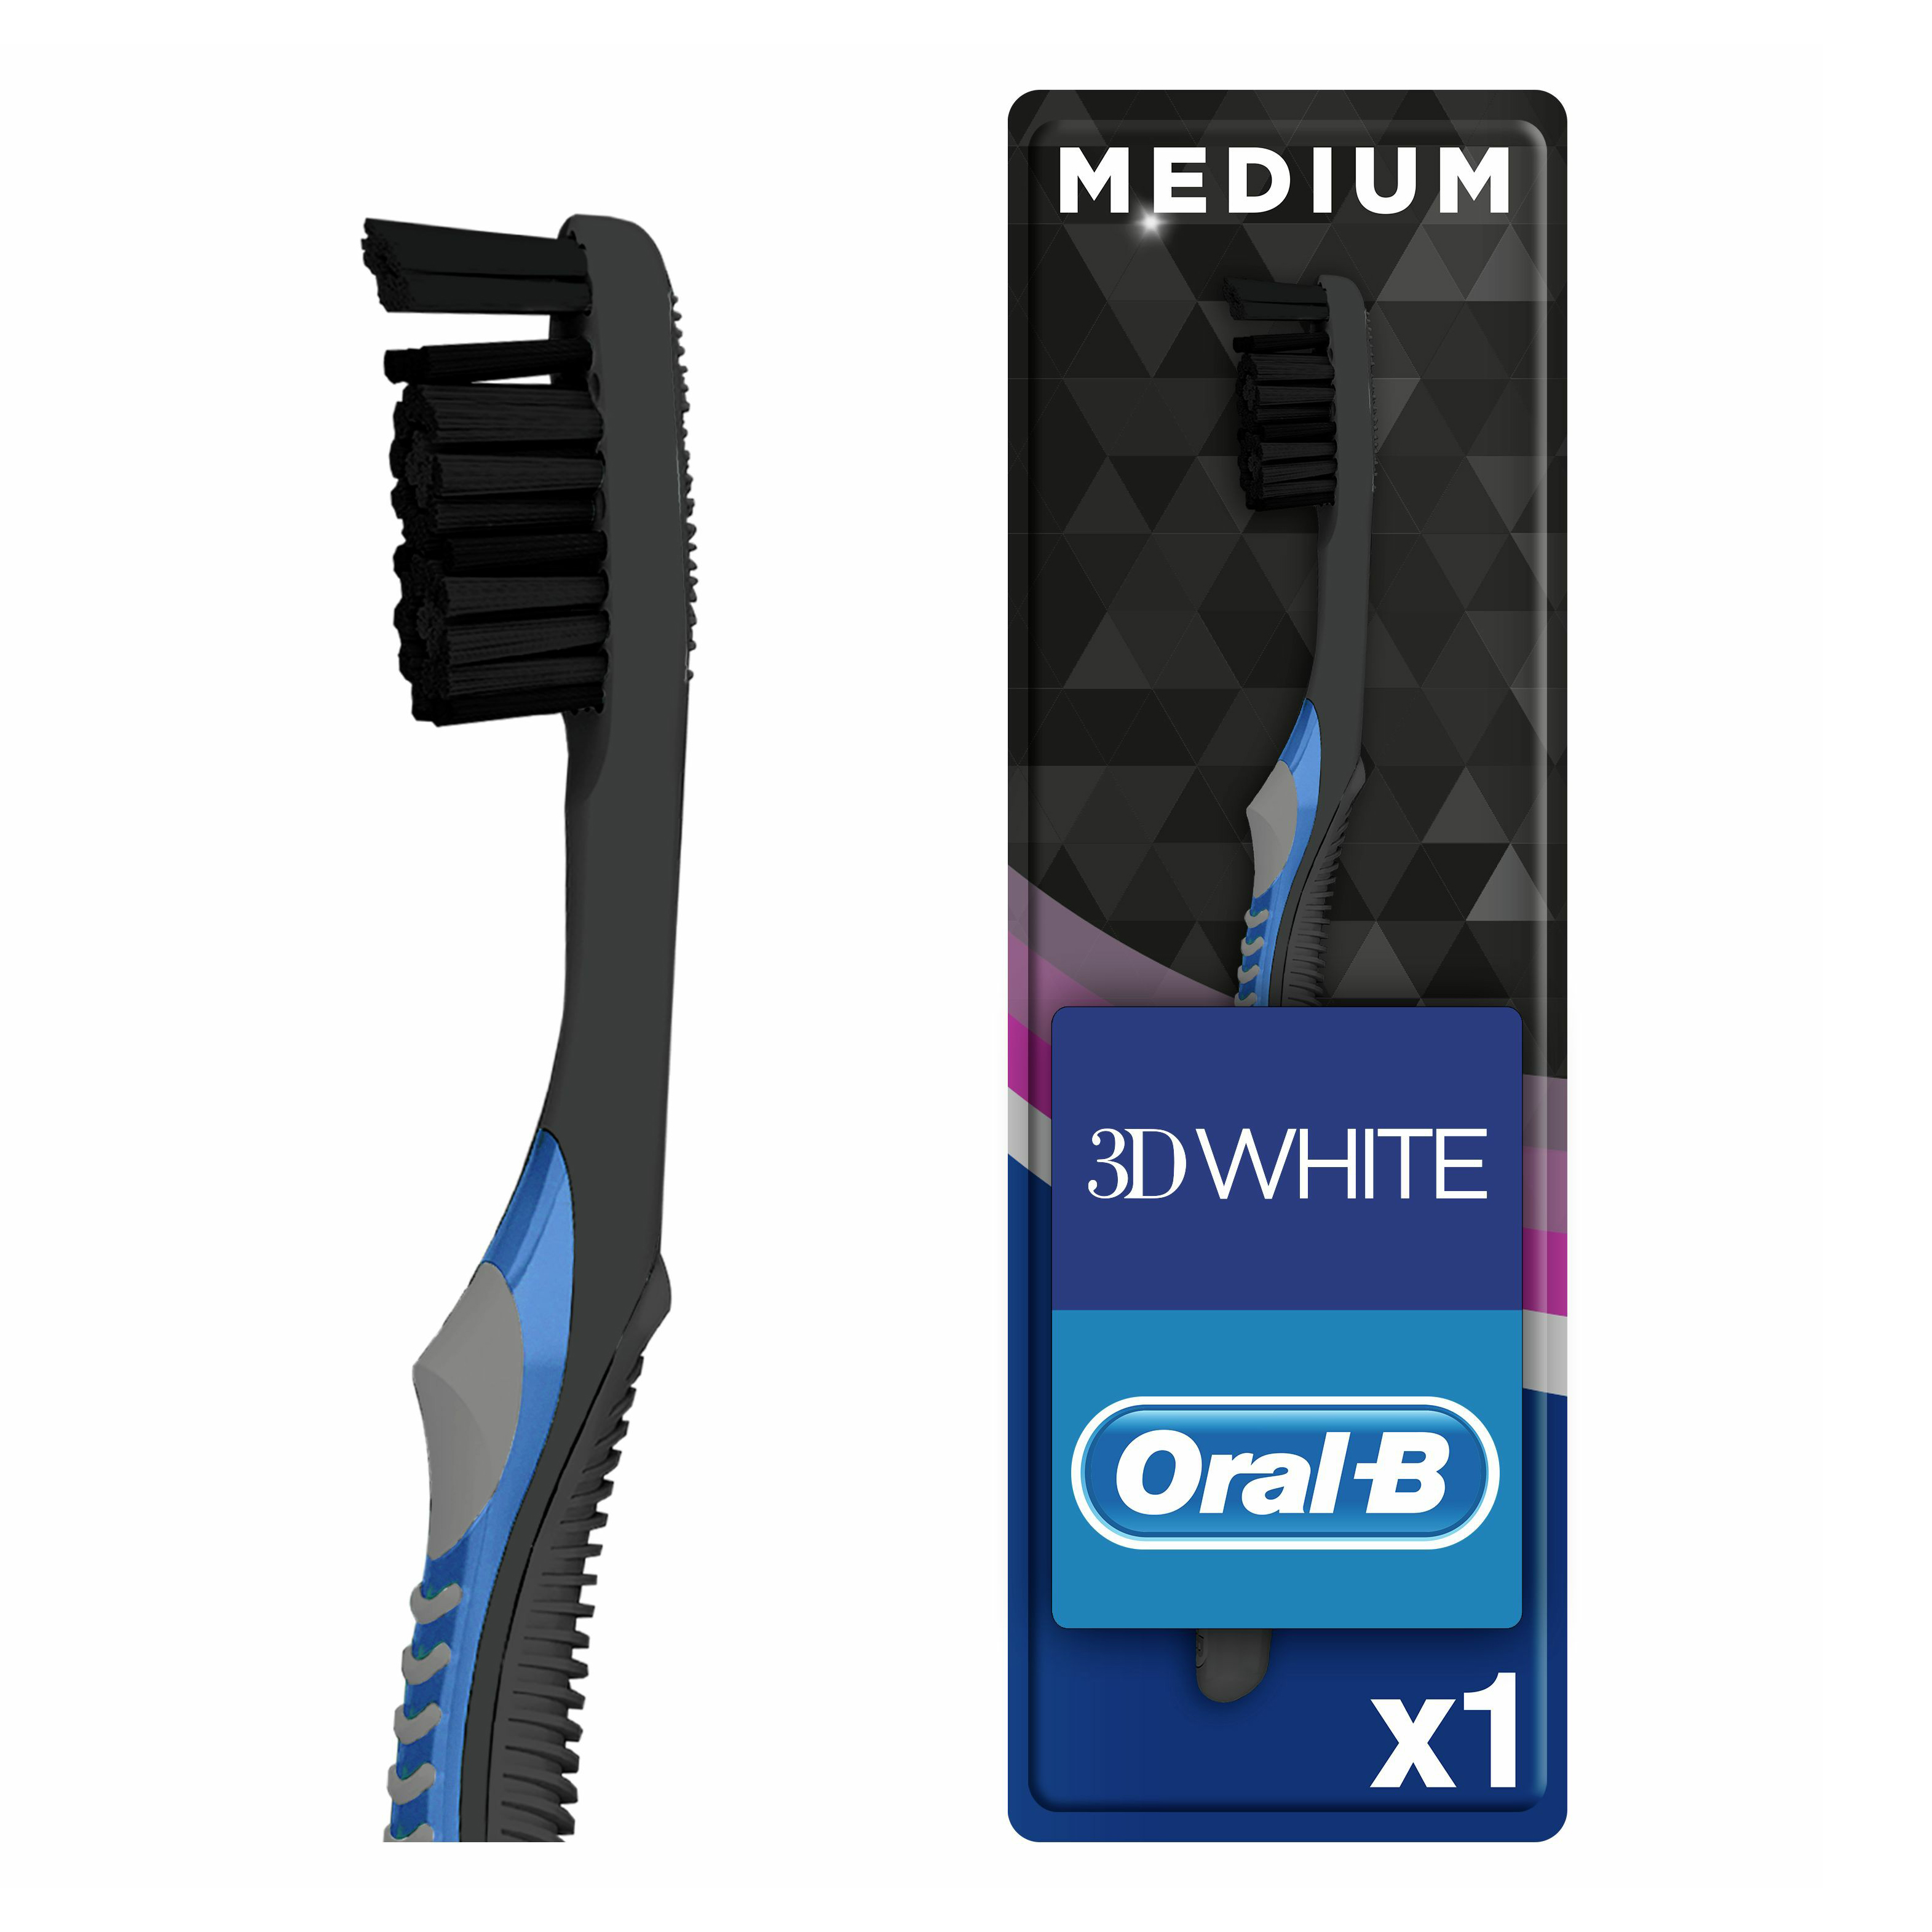 Зубная щетка Oral-B 3D White Whitening Black средней степени жесткости с древесным углем